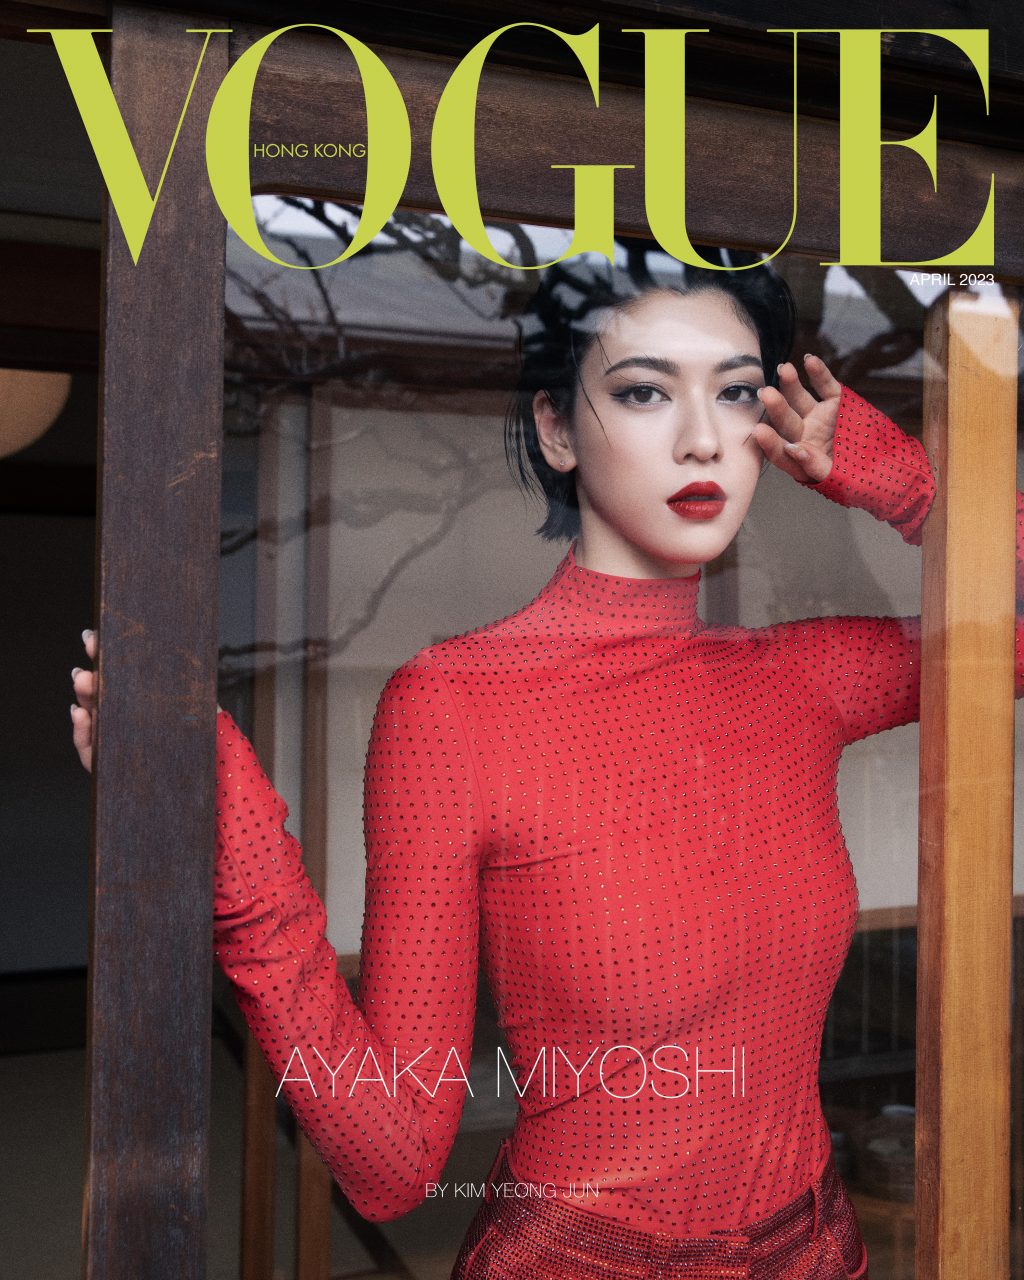 Japanese Actress Ayaka Miyoshi Stars On Vogue Hong Kong's April Issue